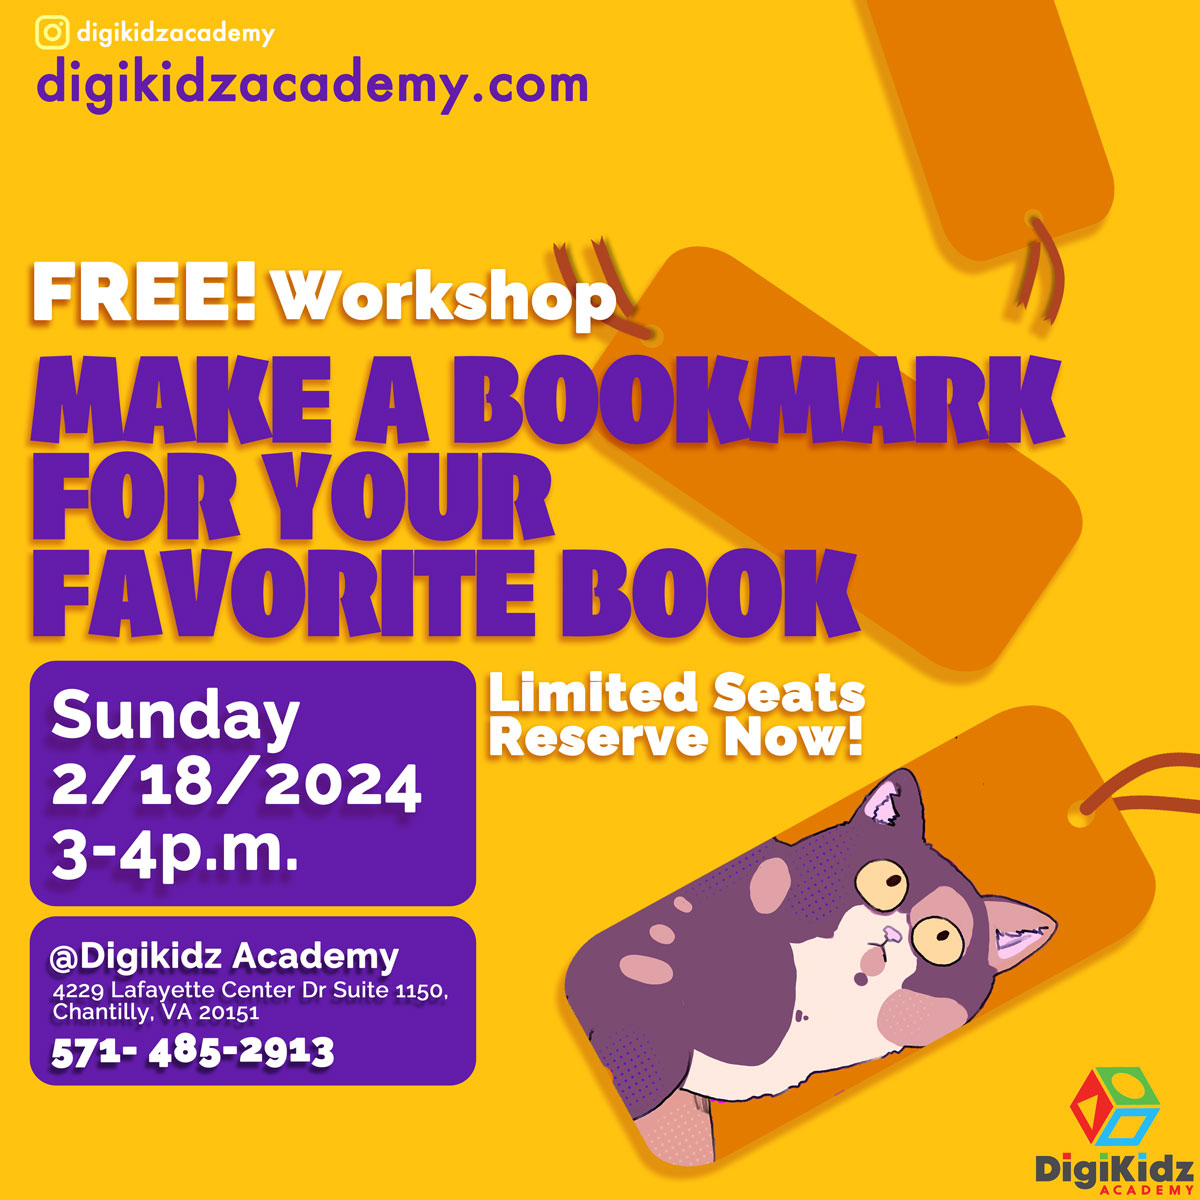 Design and Make a Bookmark - Free Workshop